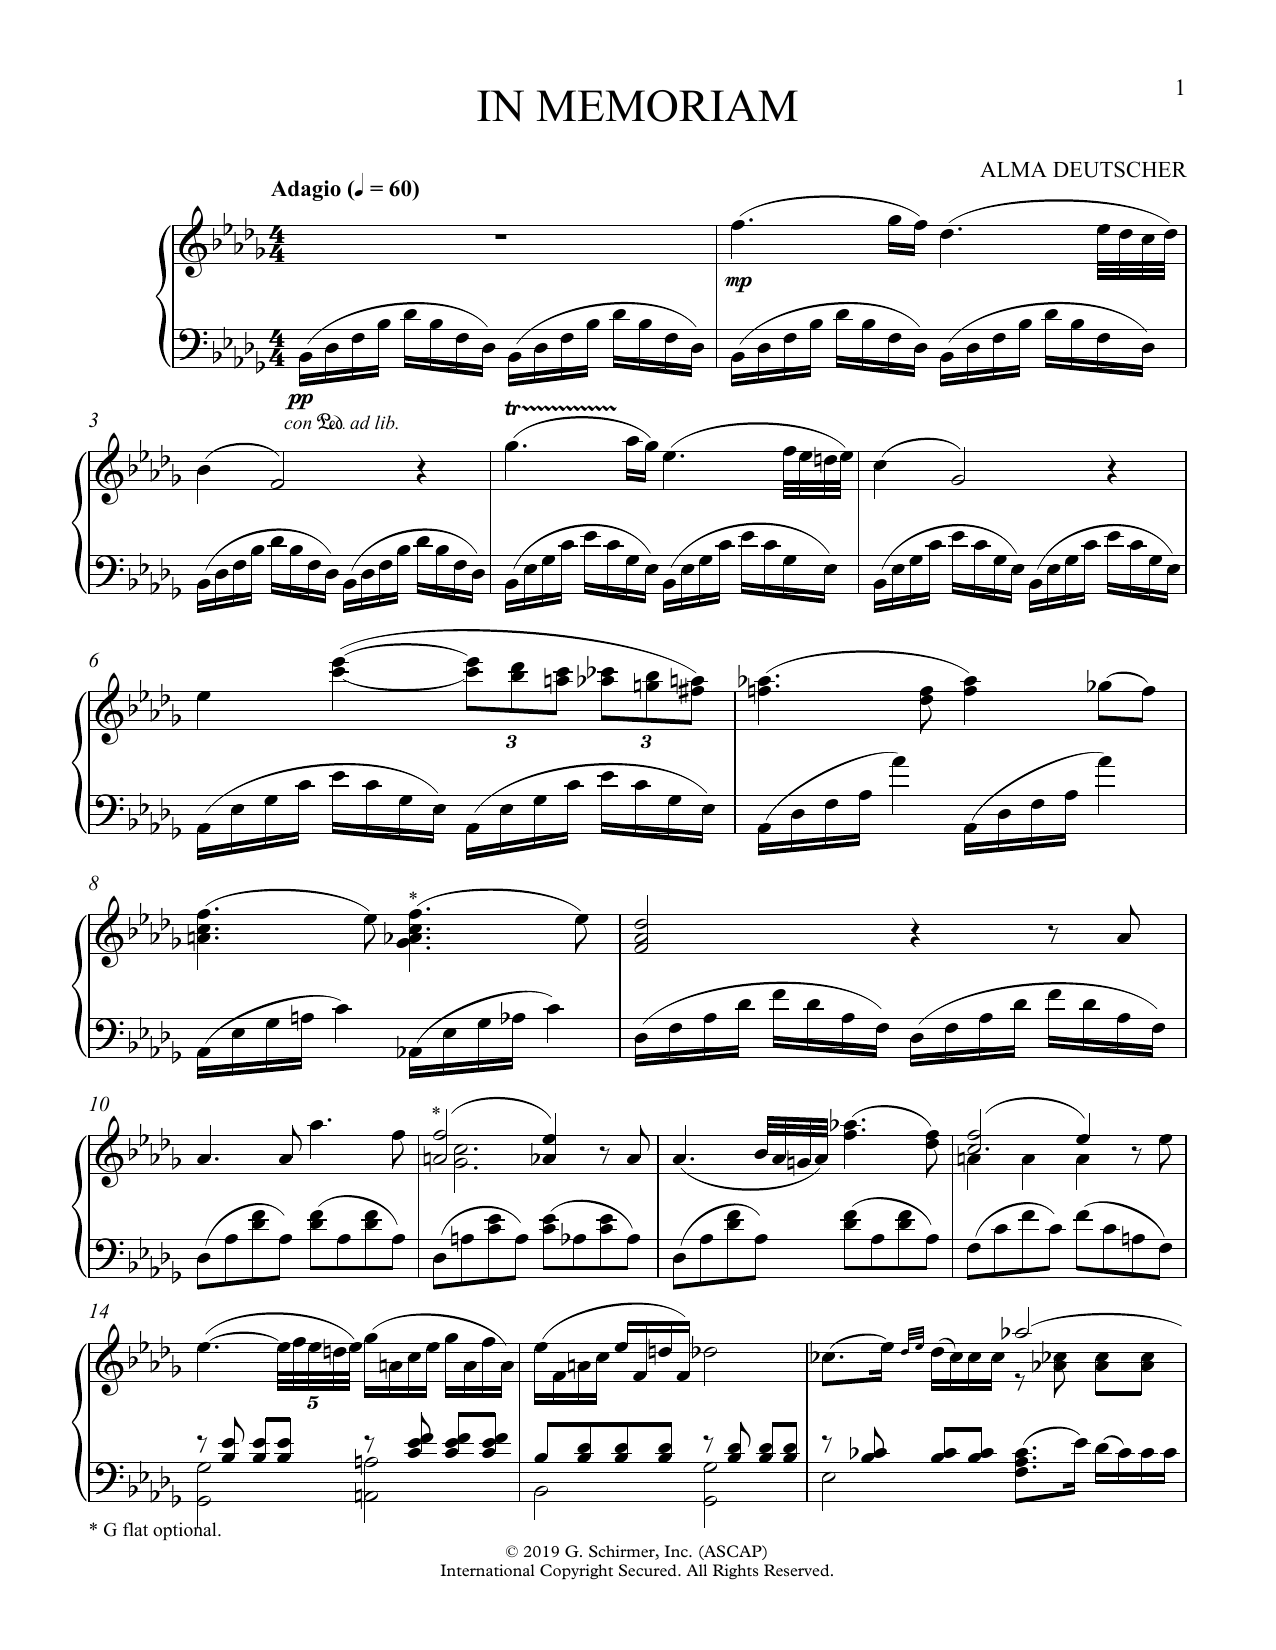 Alma Deutscher In Memoriam (Adagio from Piano Concerto) sheet music notes and chords arranged for Piano Solo